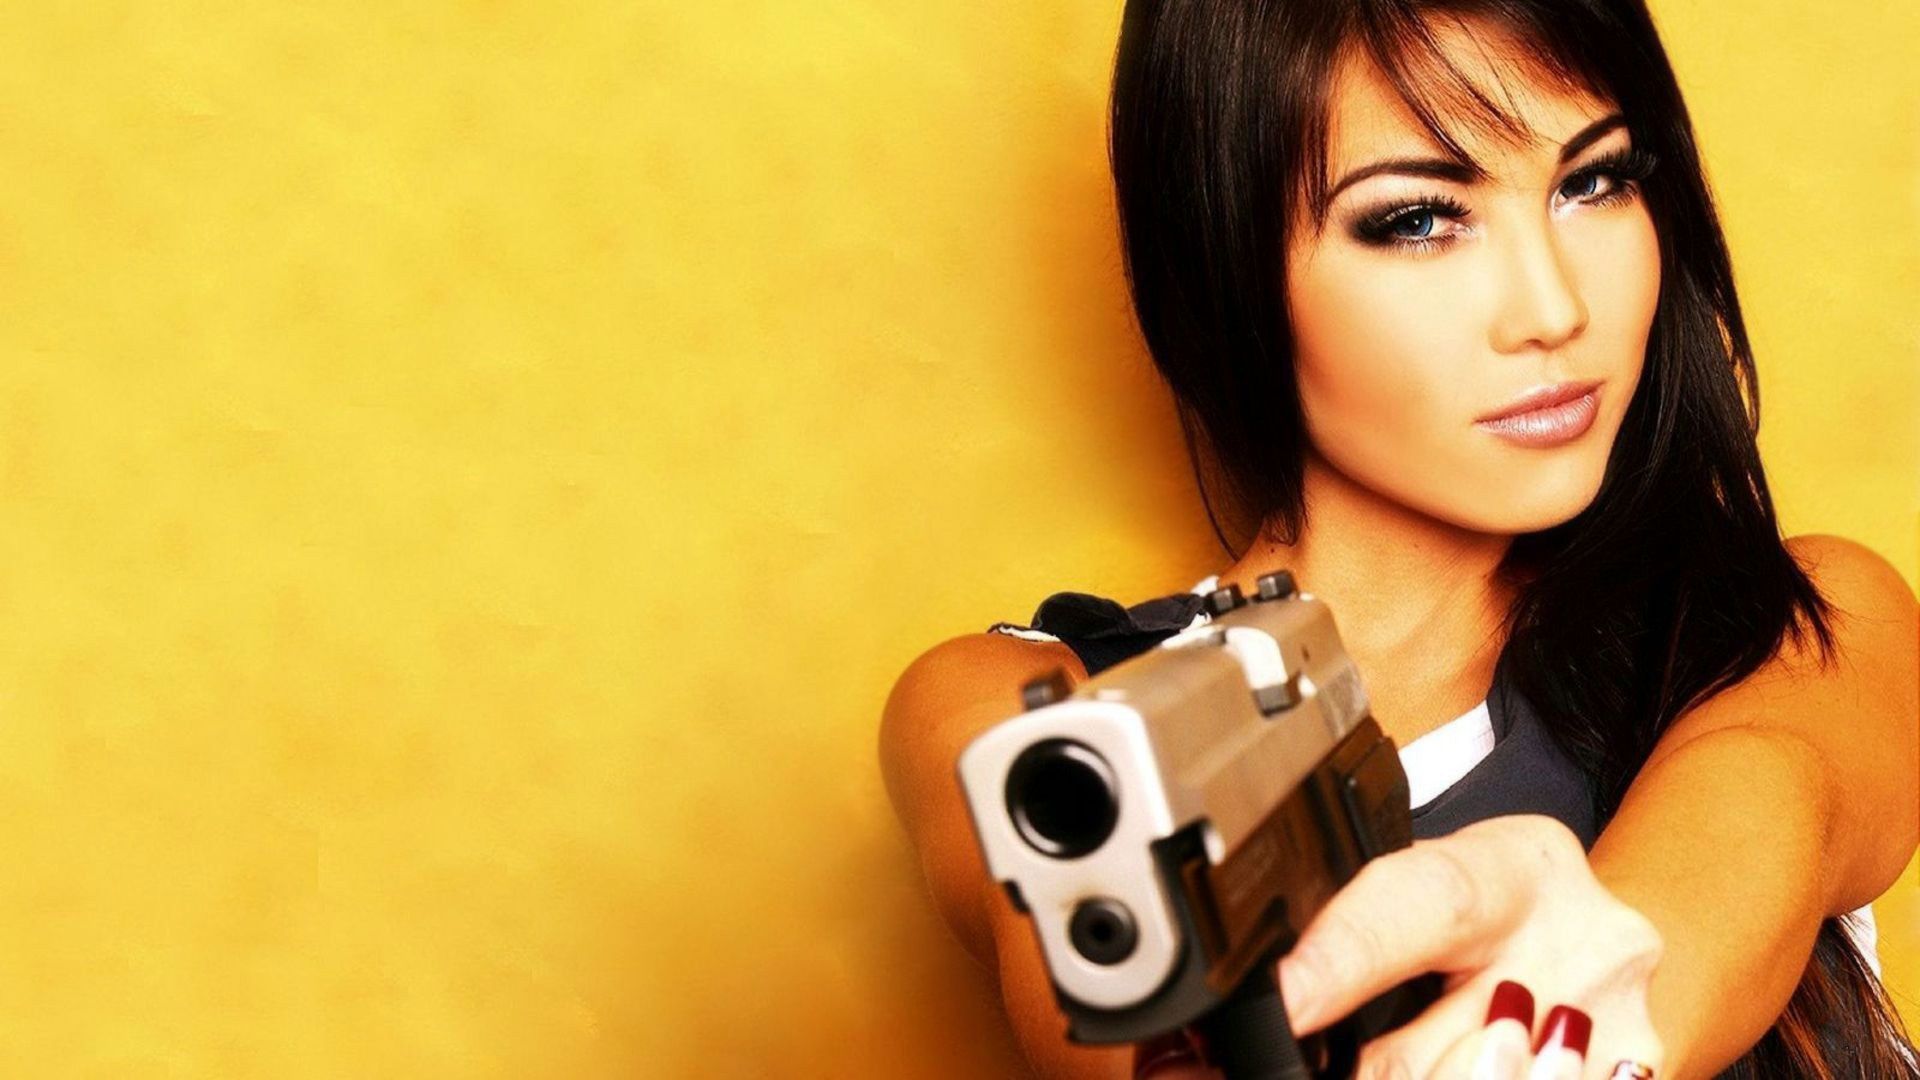 Girl With Gun Desktop Wallpaper, Girl With Gun Pictures, New ...